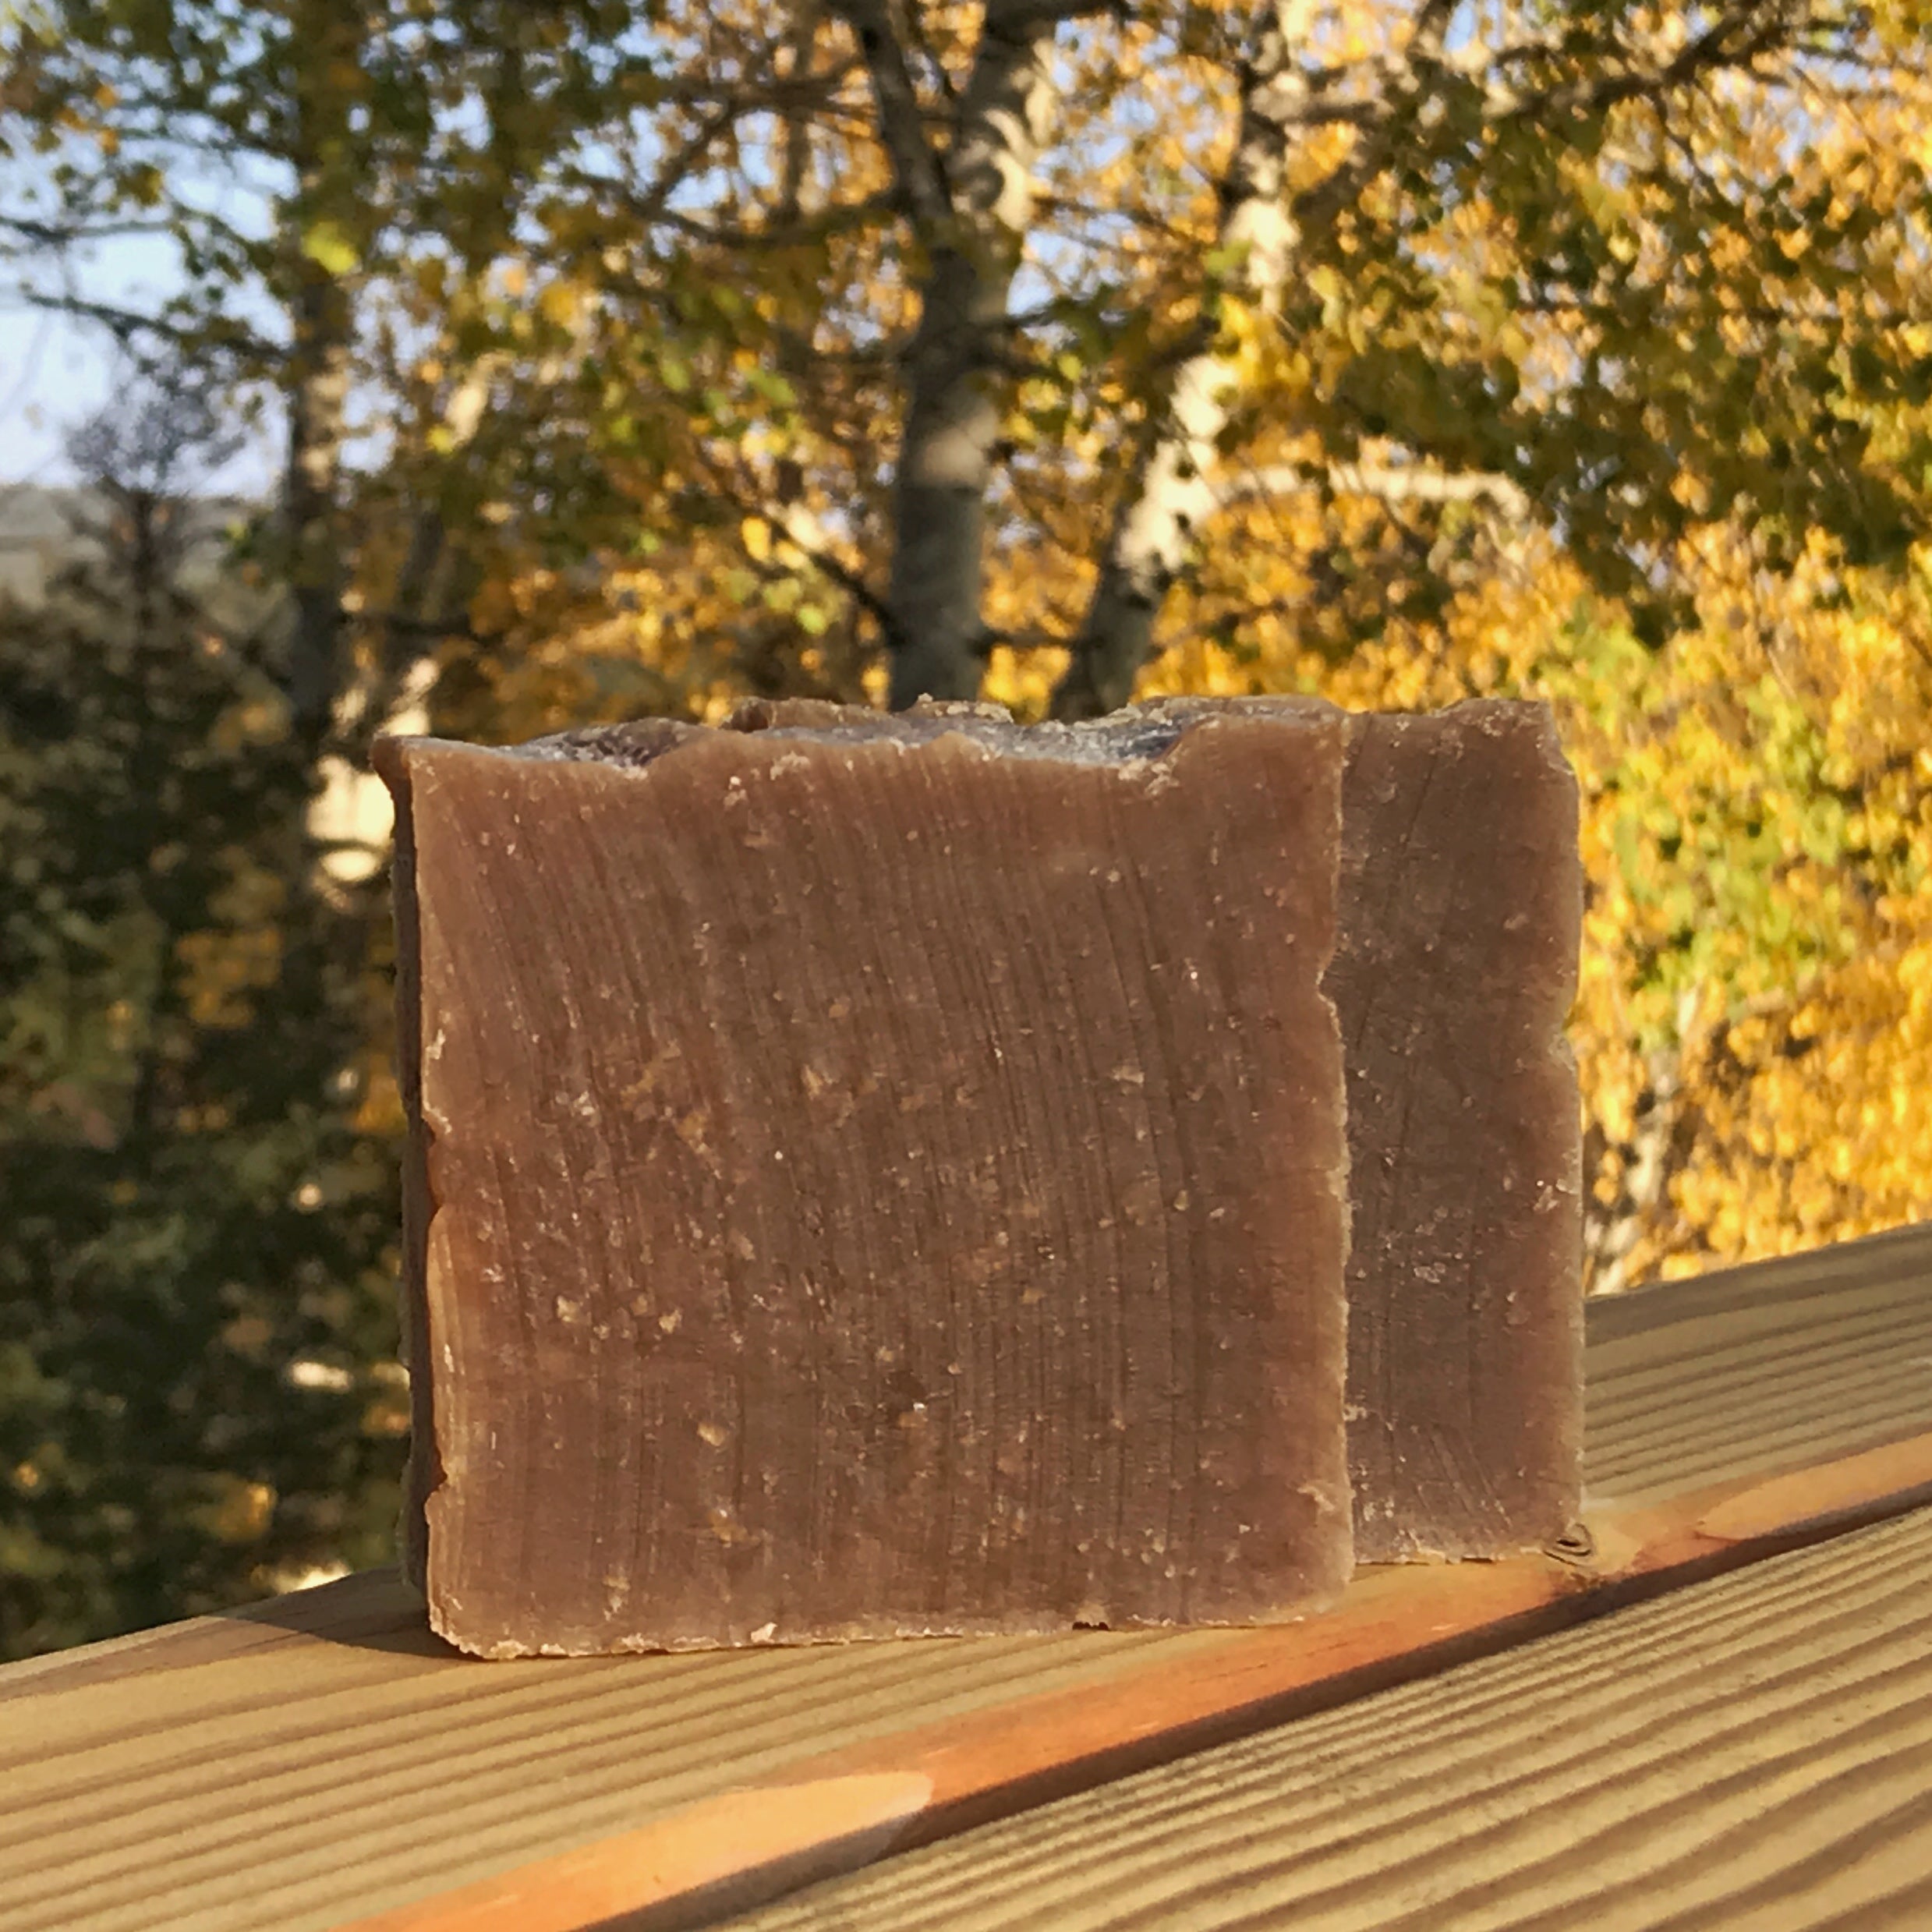 DIY Pine Tar Soap Recipe 